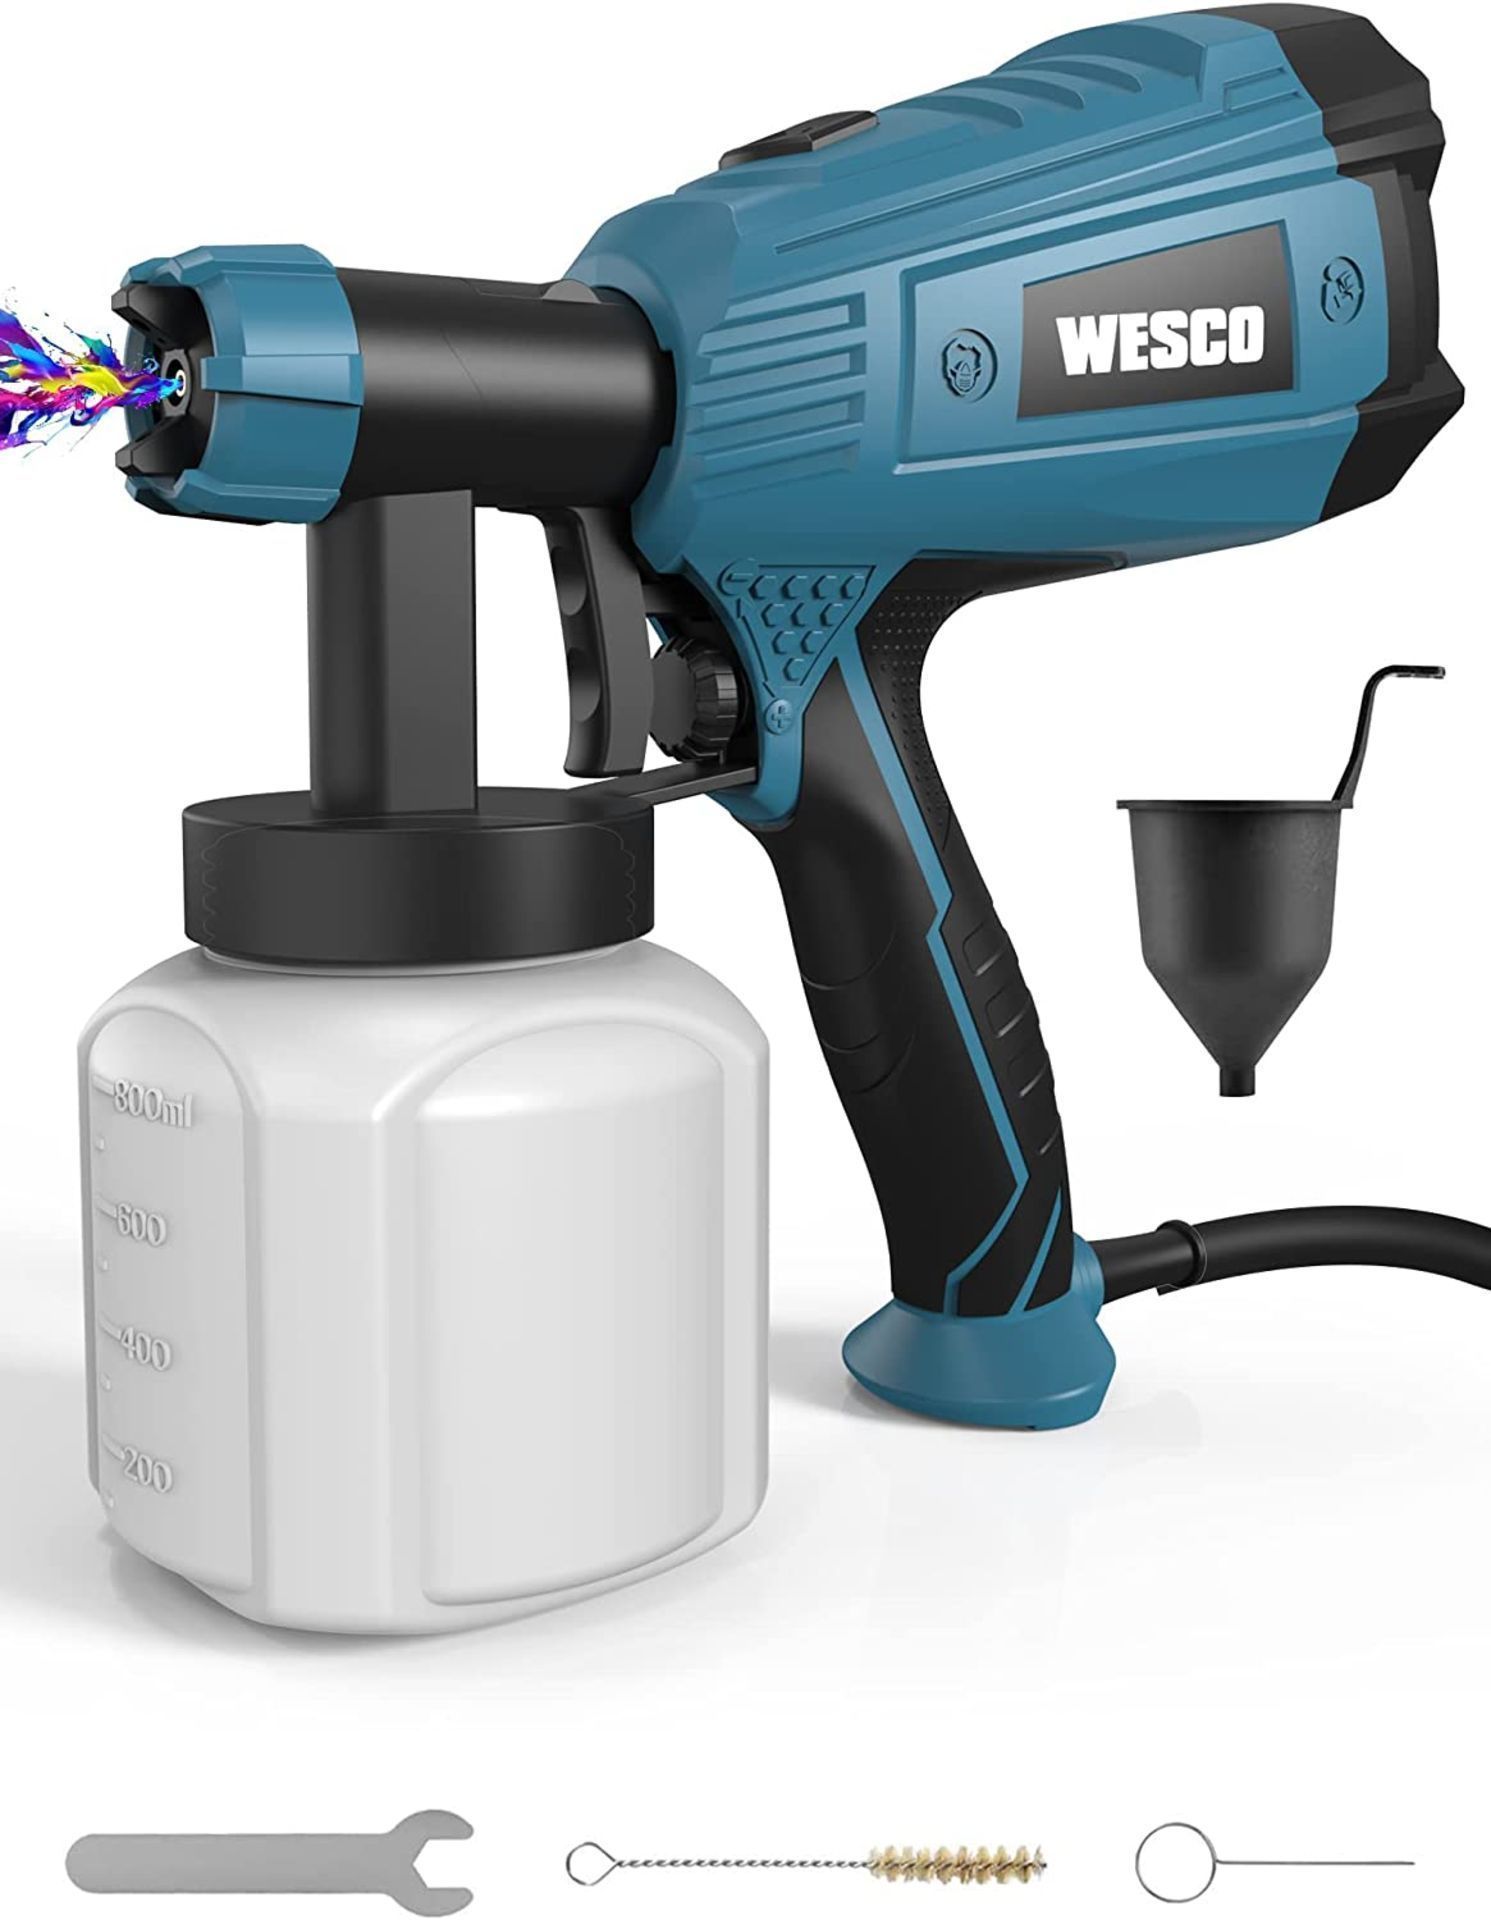 PALLET TO CONTAIN 48 X NEW BOXED WESCO Paint Sprayer, WESCO 500W DIY Electric Spray Gun with 3 Spray